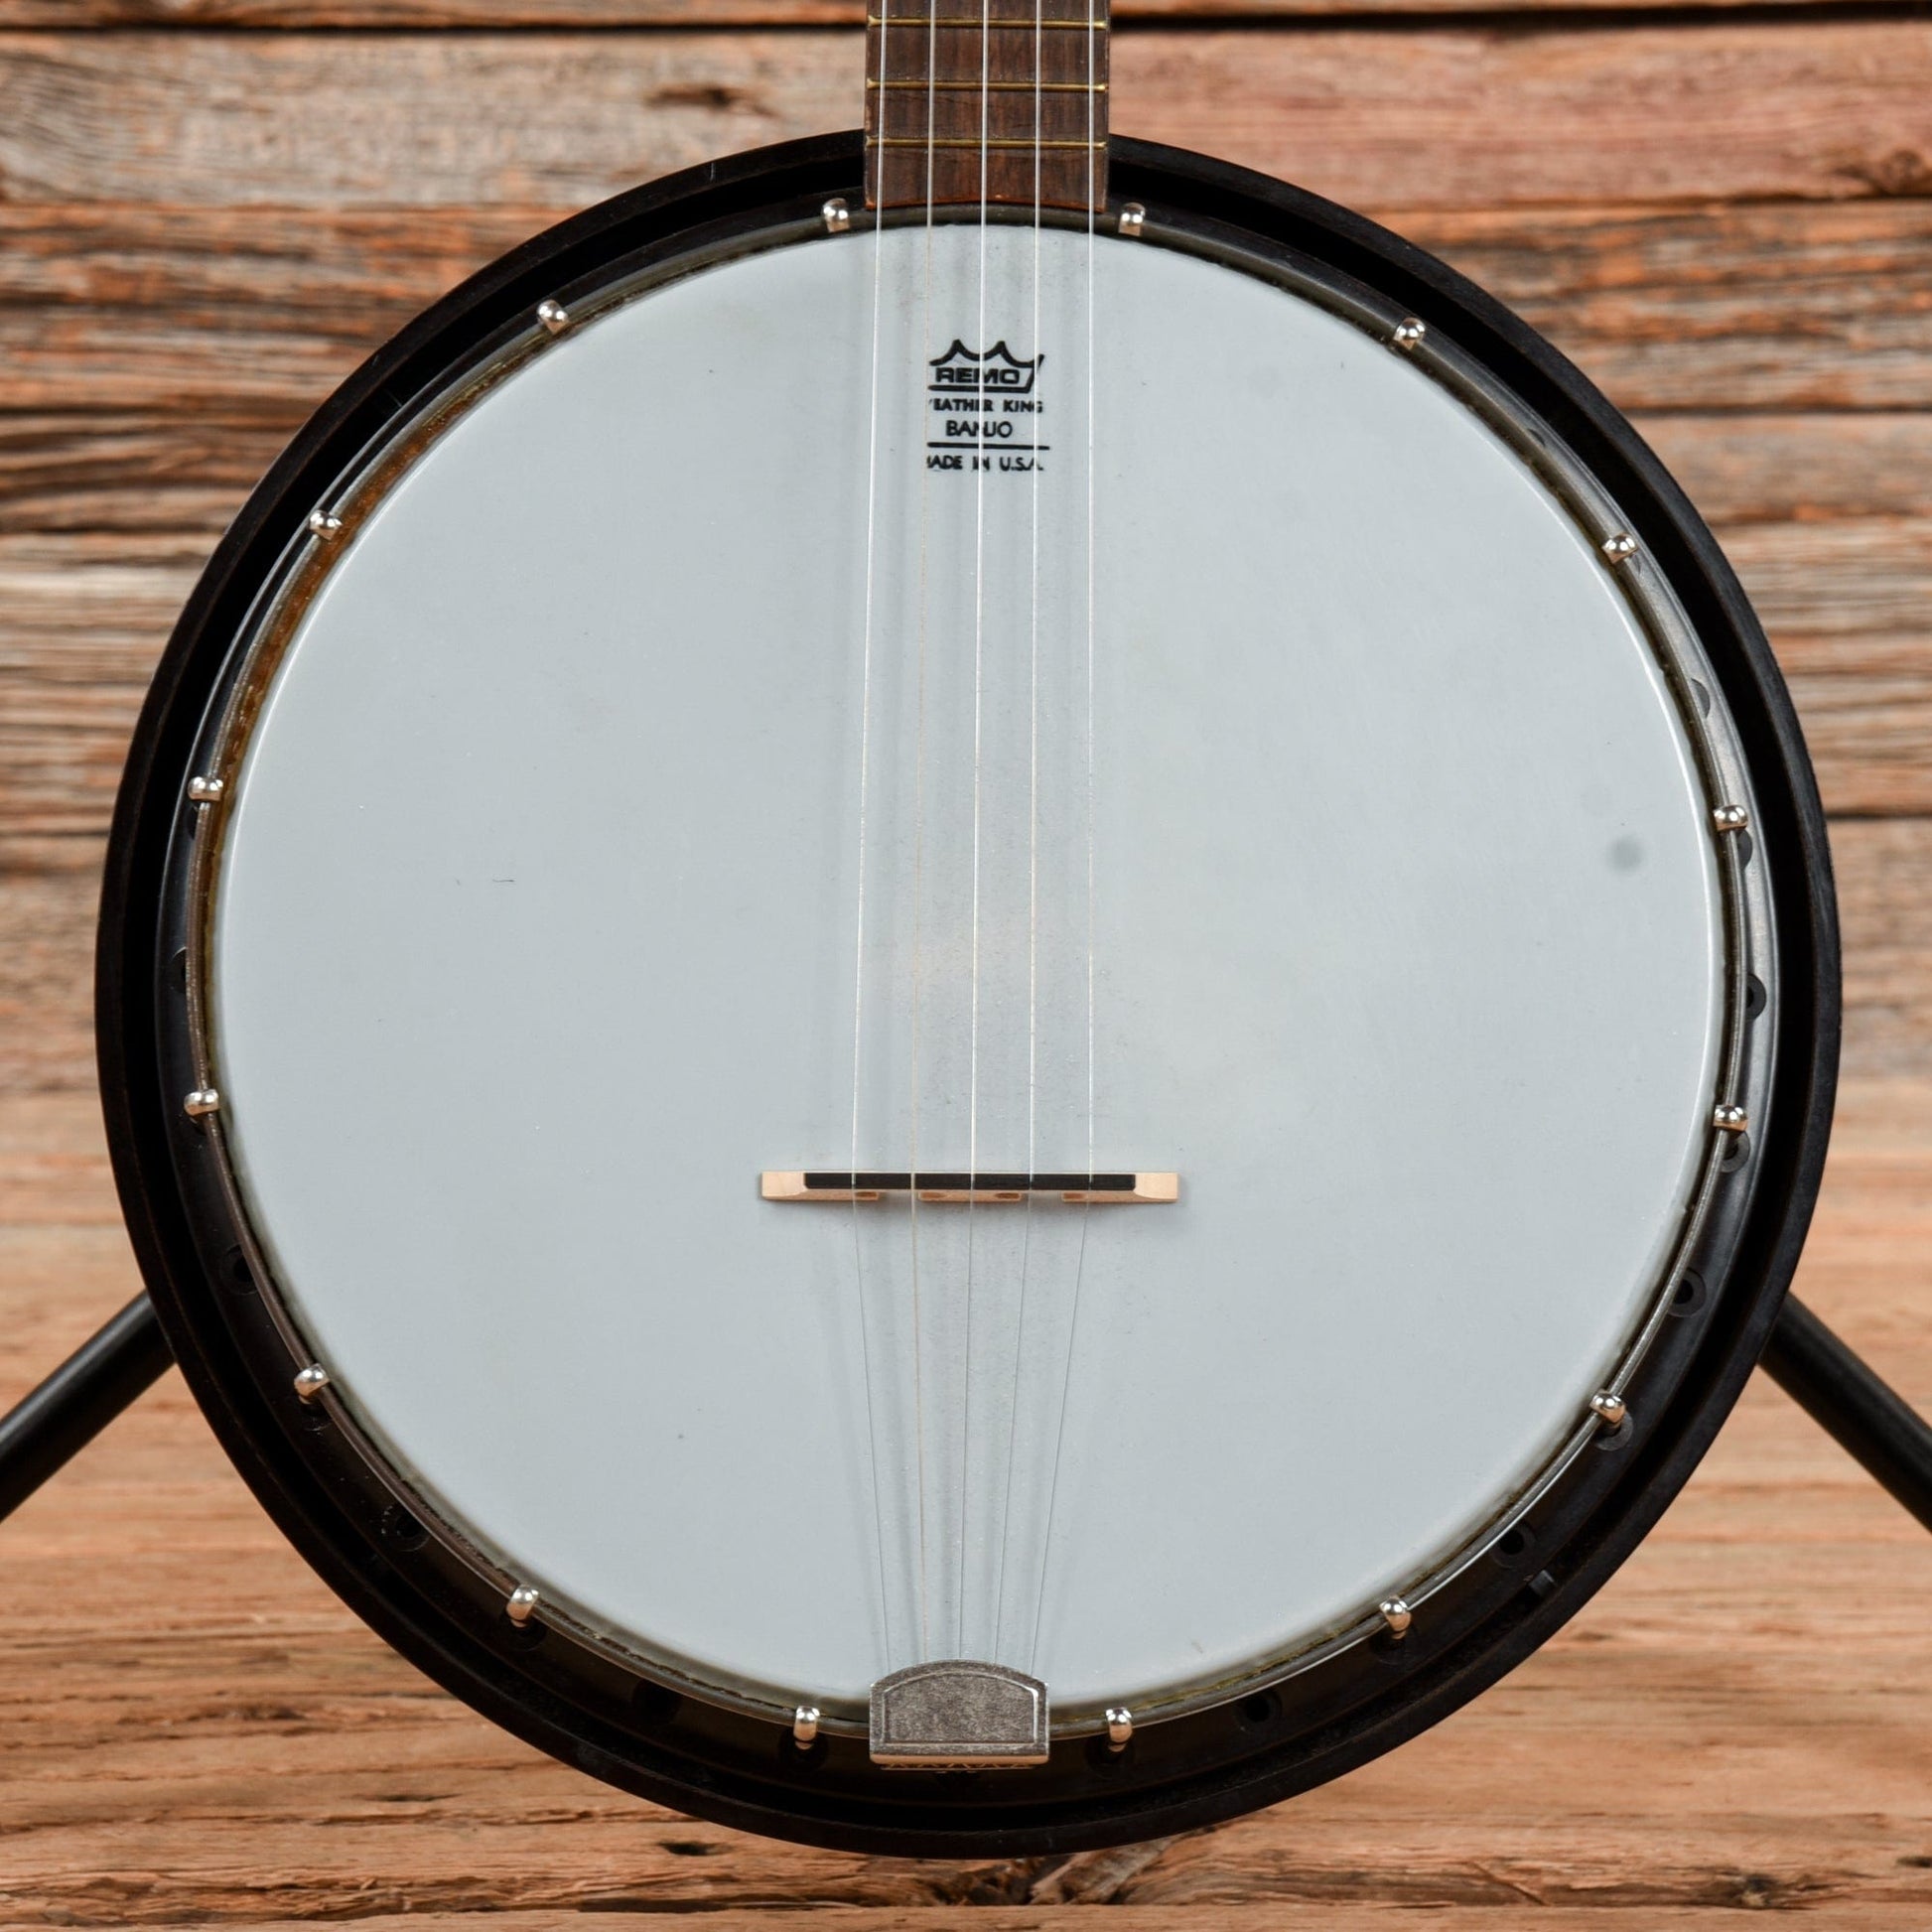 Chicago 5-String Banjo Folk Instruments / Banjos